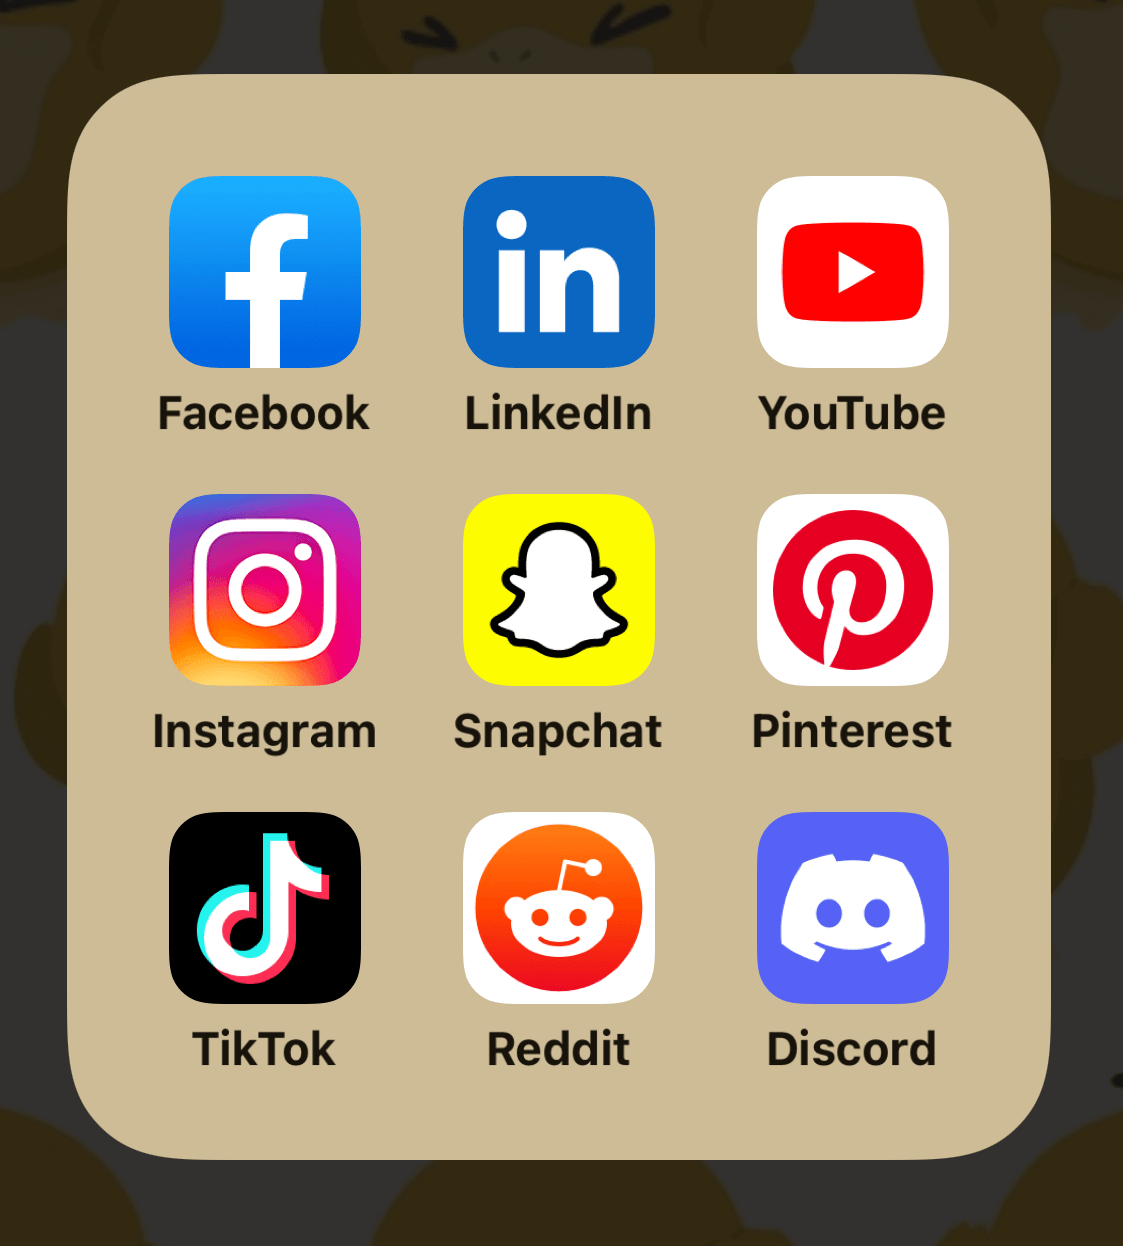 image of icons for major social media platforms